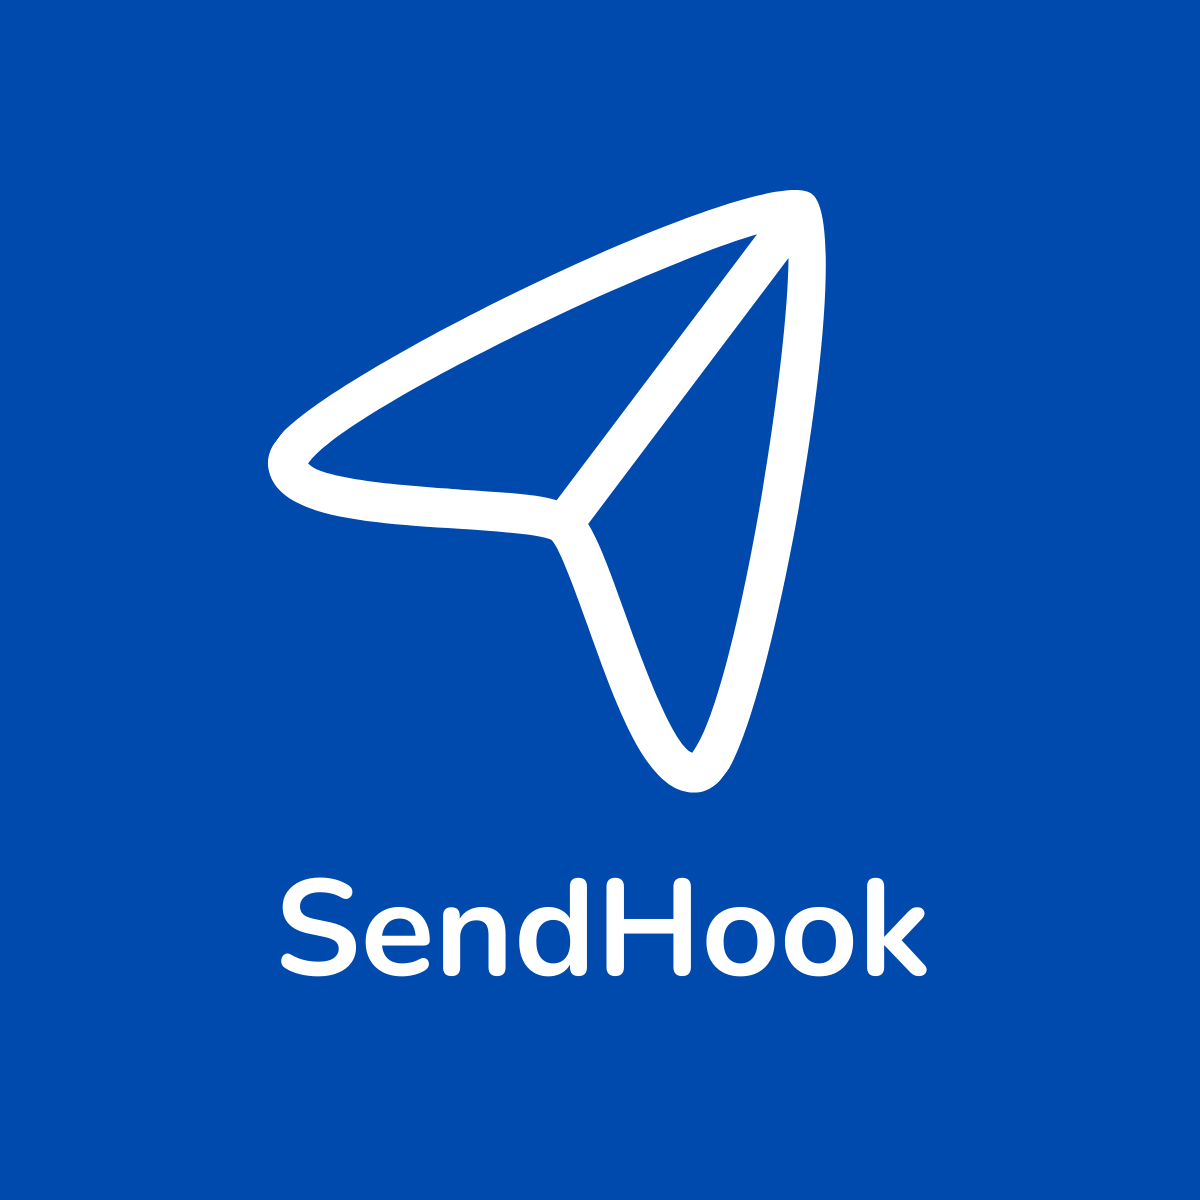 SendHook